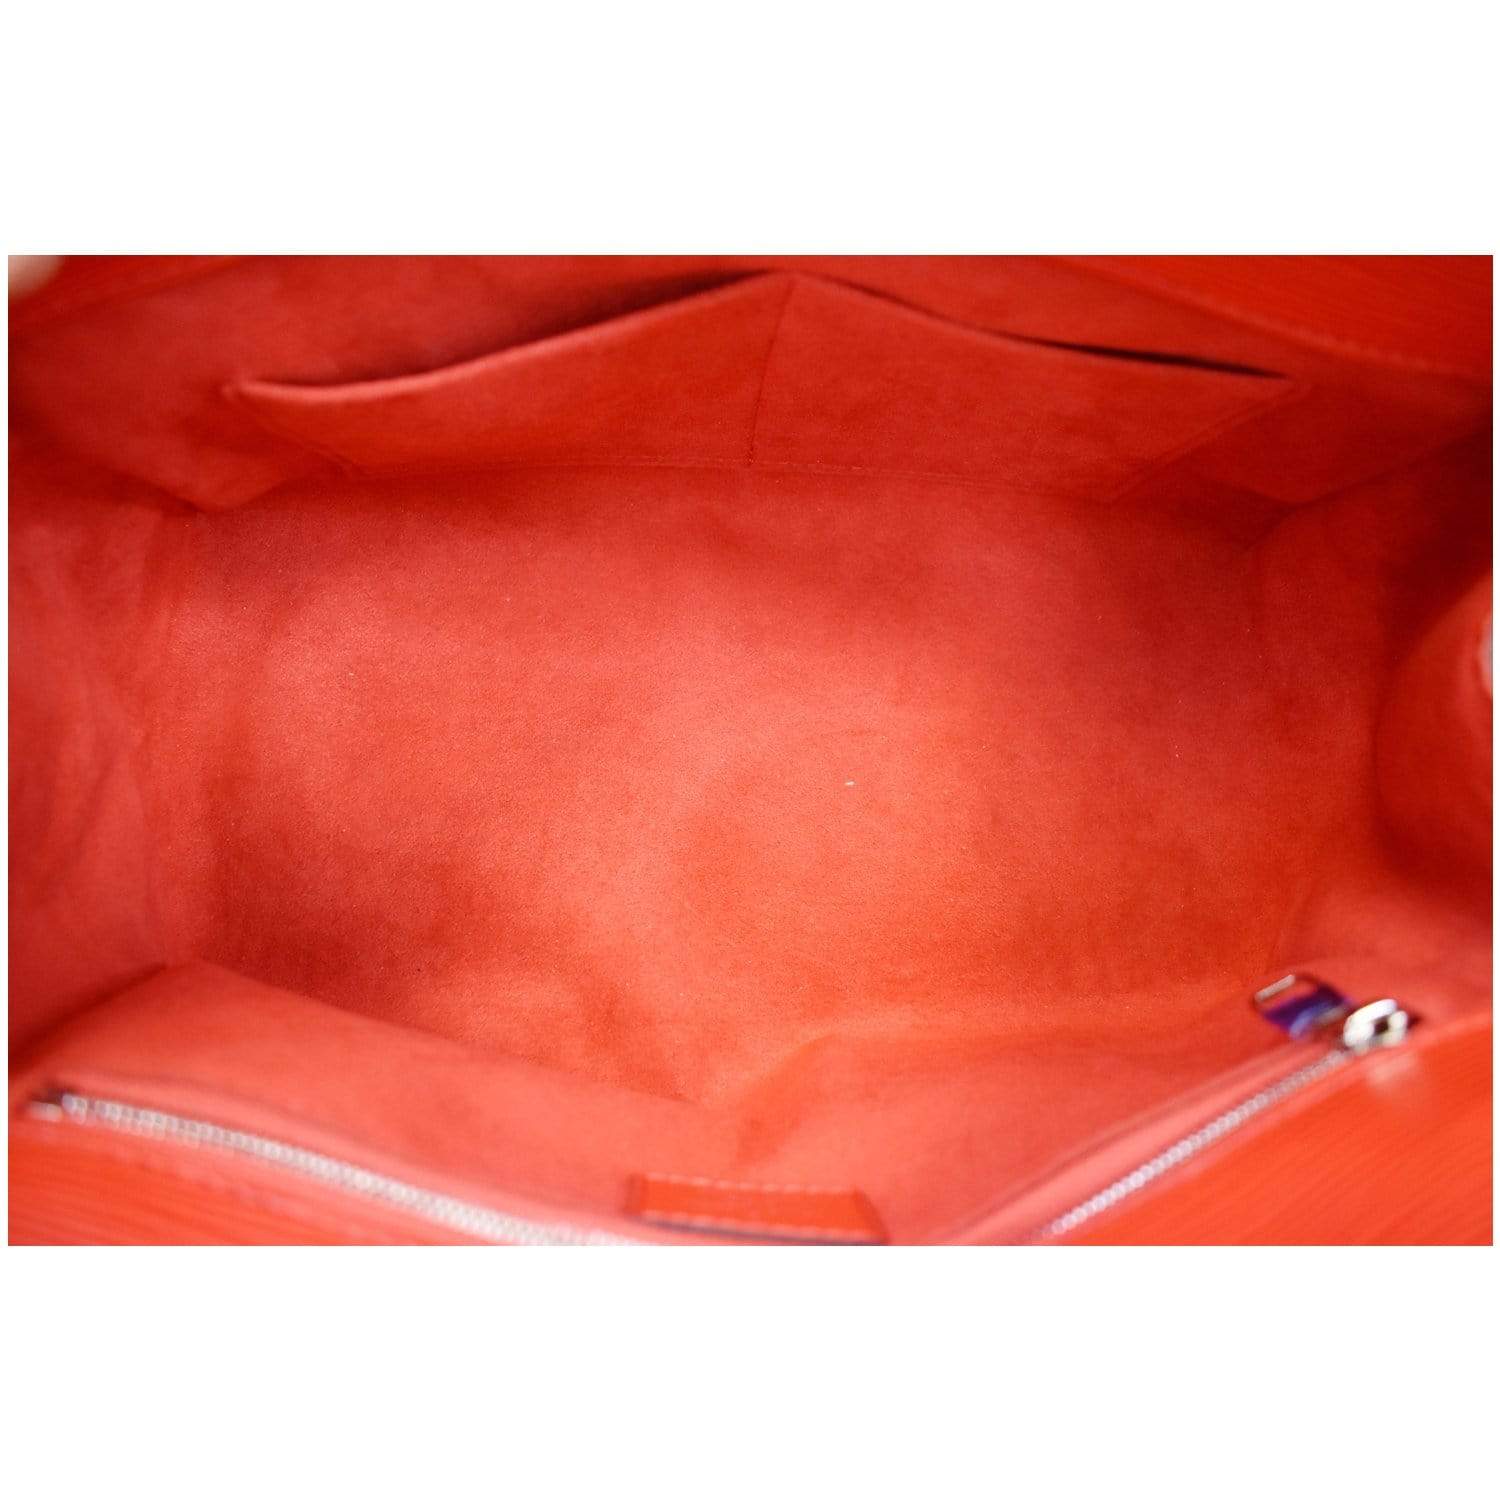 Marly bag in orange epi leather